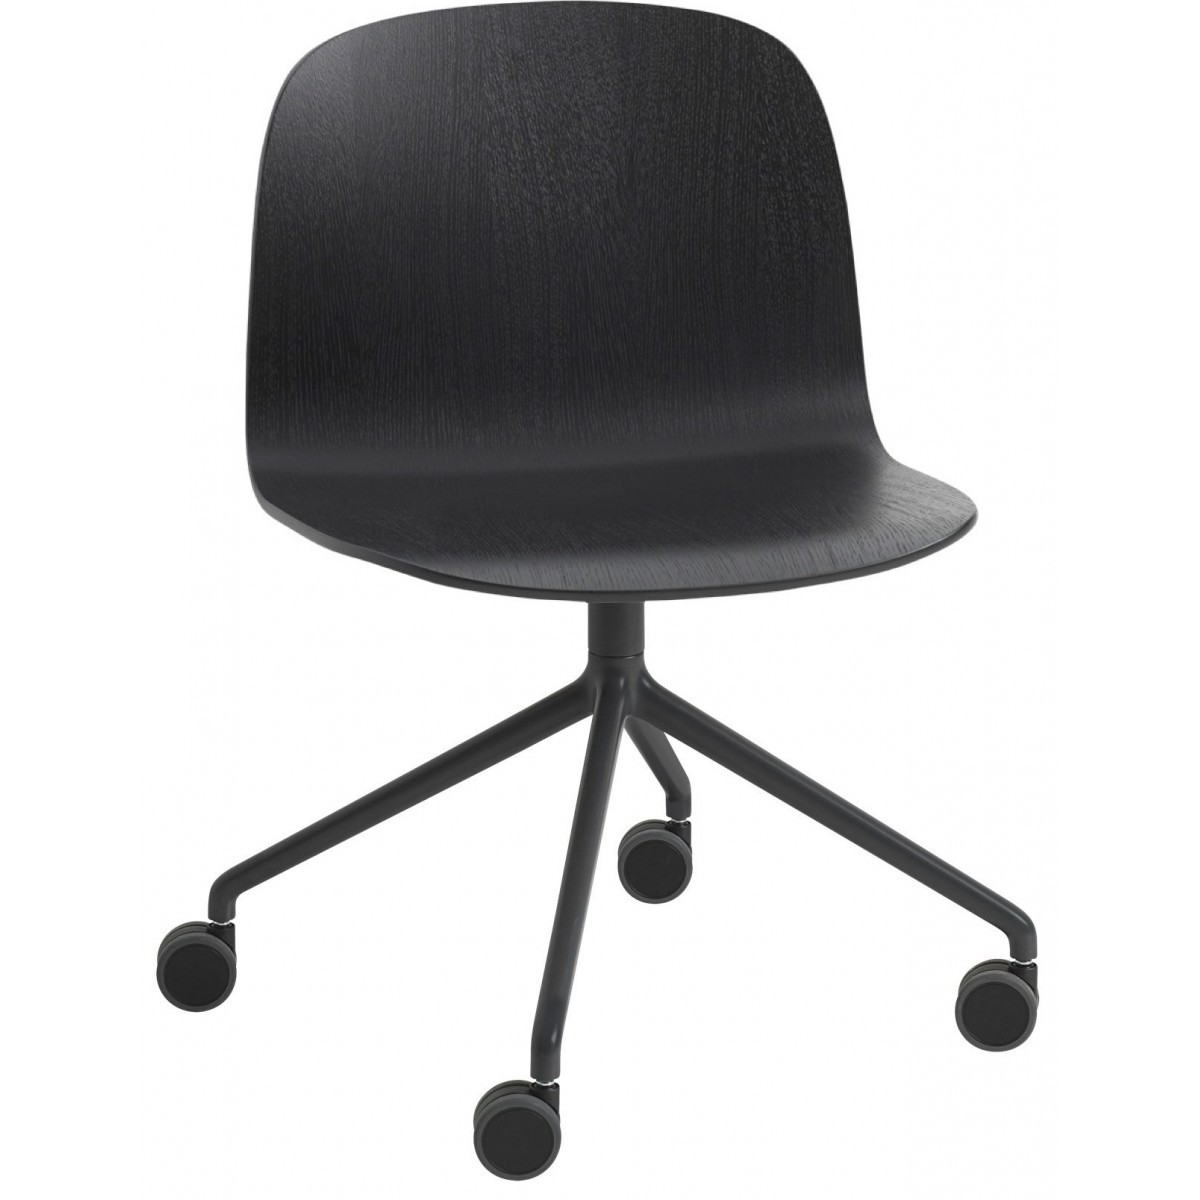 black, with castors - Visu Wide chair swivel base